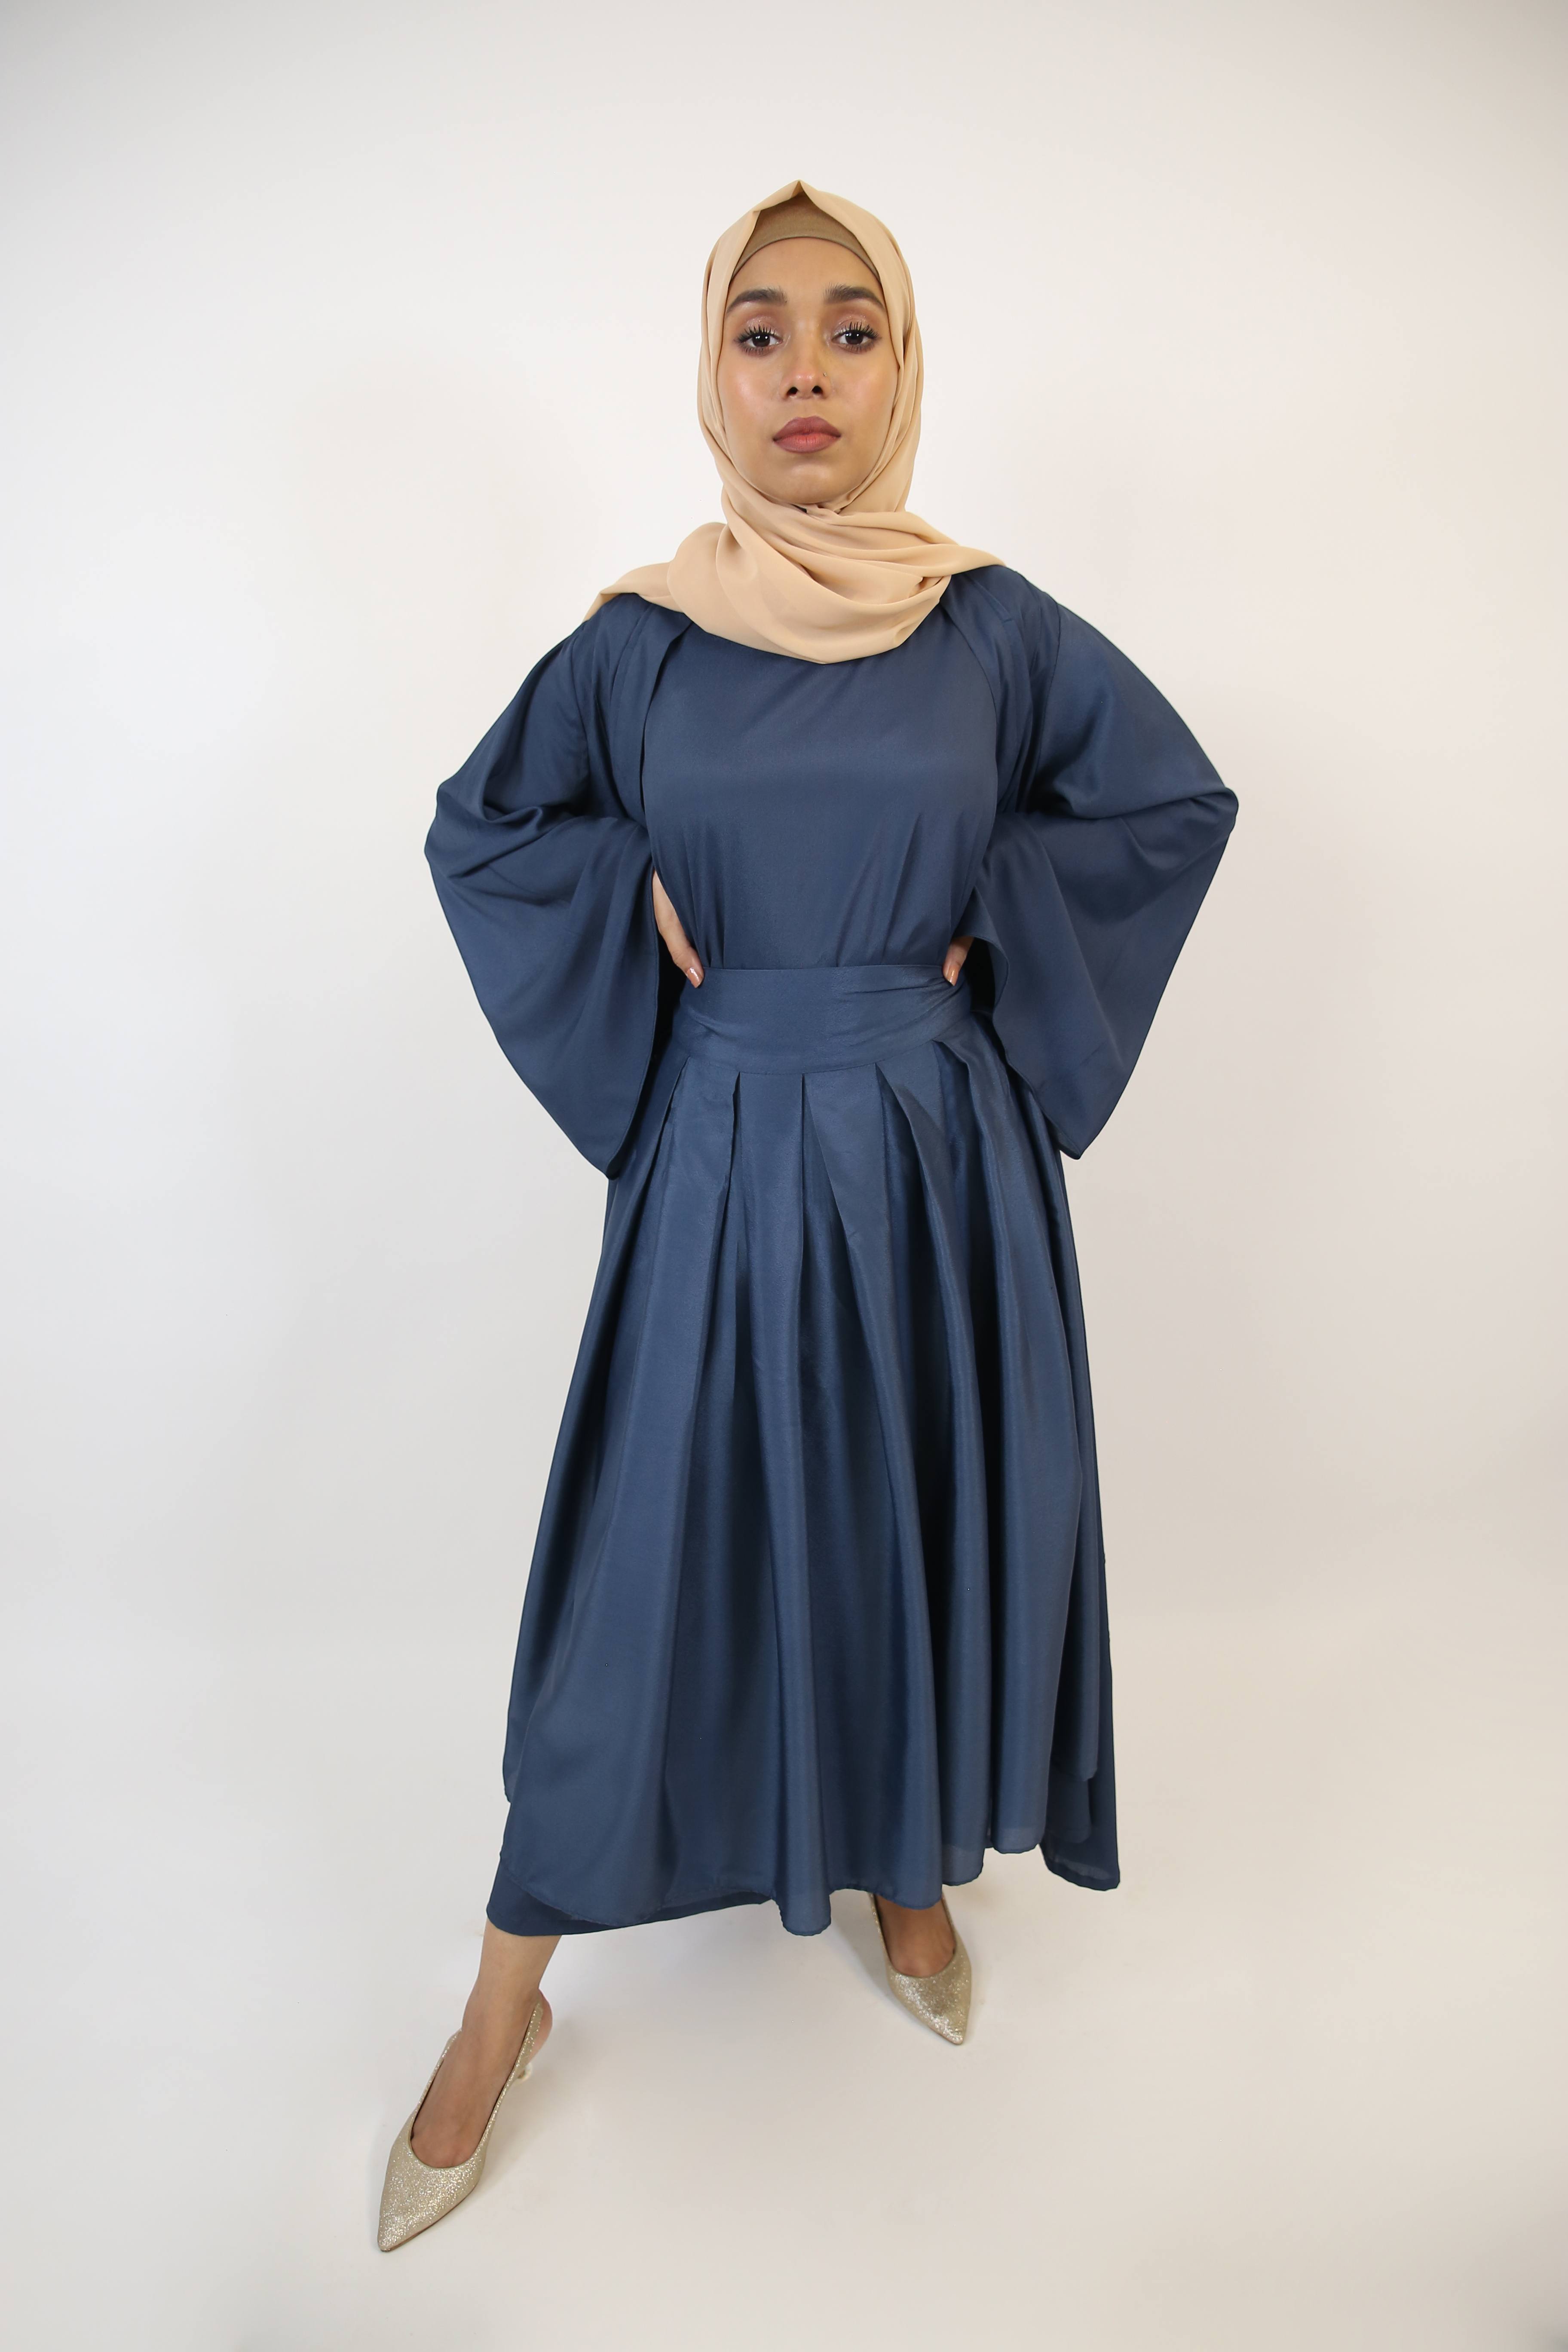 Yaqoot- Elegant three piece throw over abaya set with apron belt and inner slip dress- Navy blue